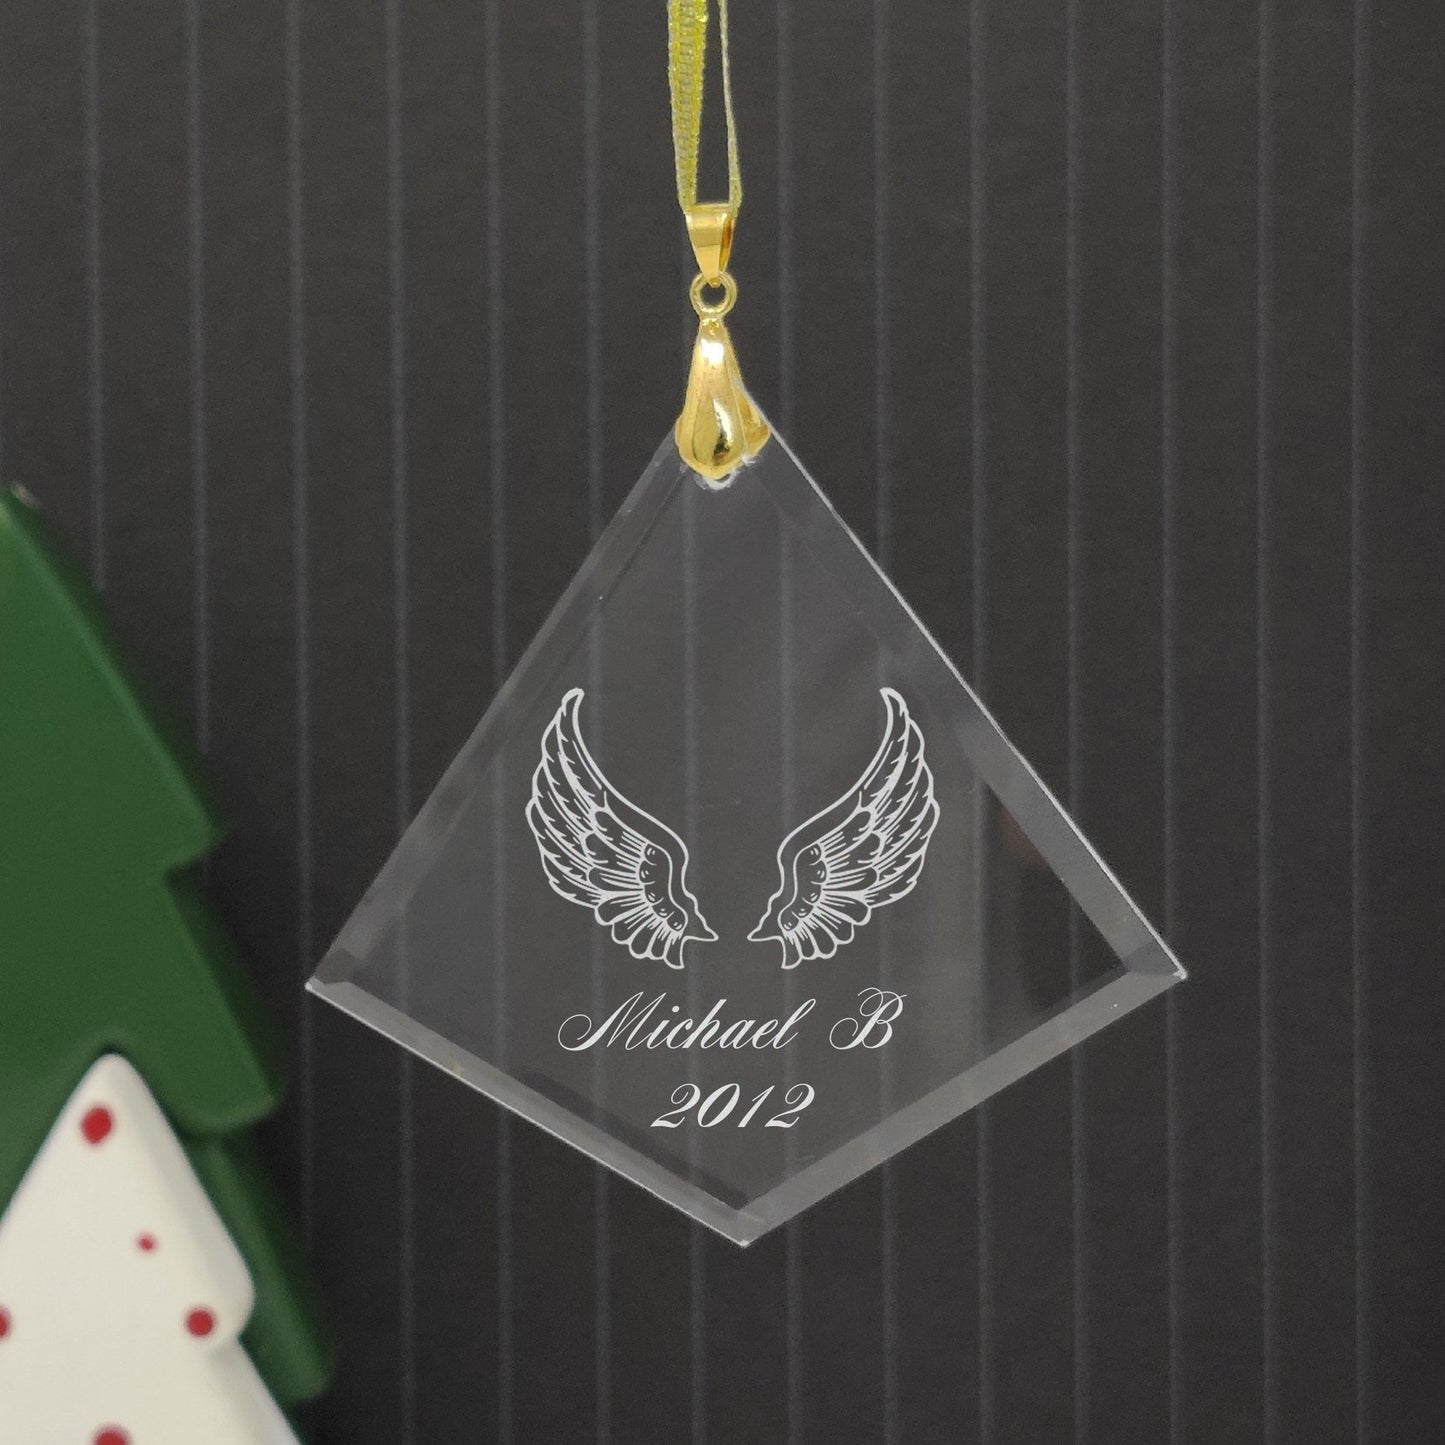 LaserGram Christmas Ornament, NP Nurse Practitioner, Personalized Engraving Included (Diamond Shape)